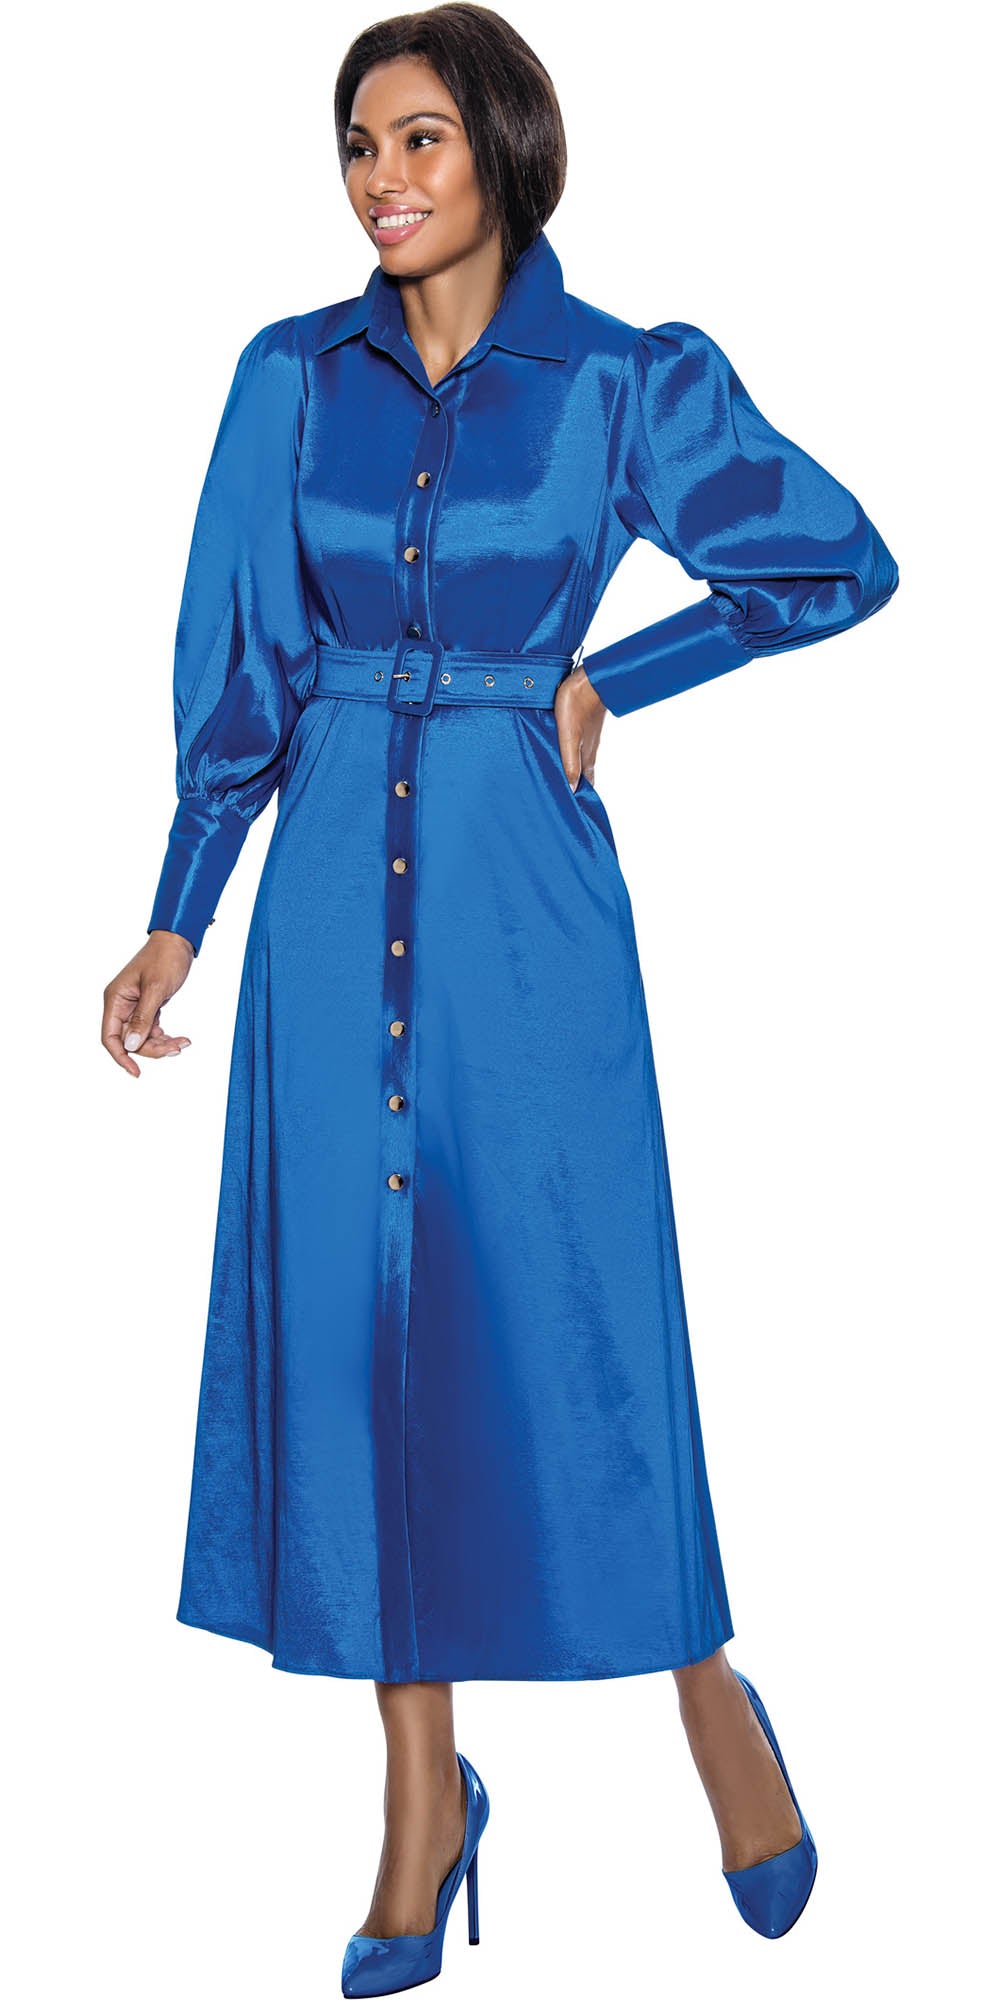 Terramina 7055 - Royal - Belted Dress with Lantern Sleeves